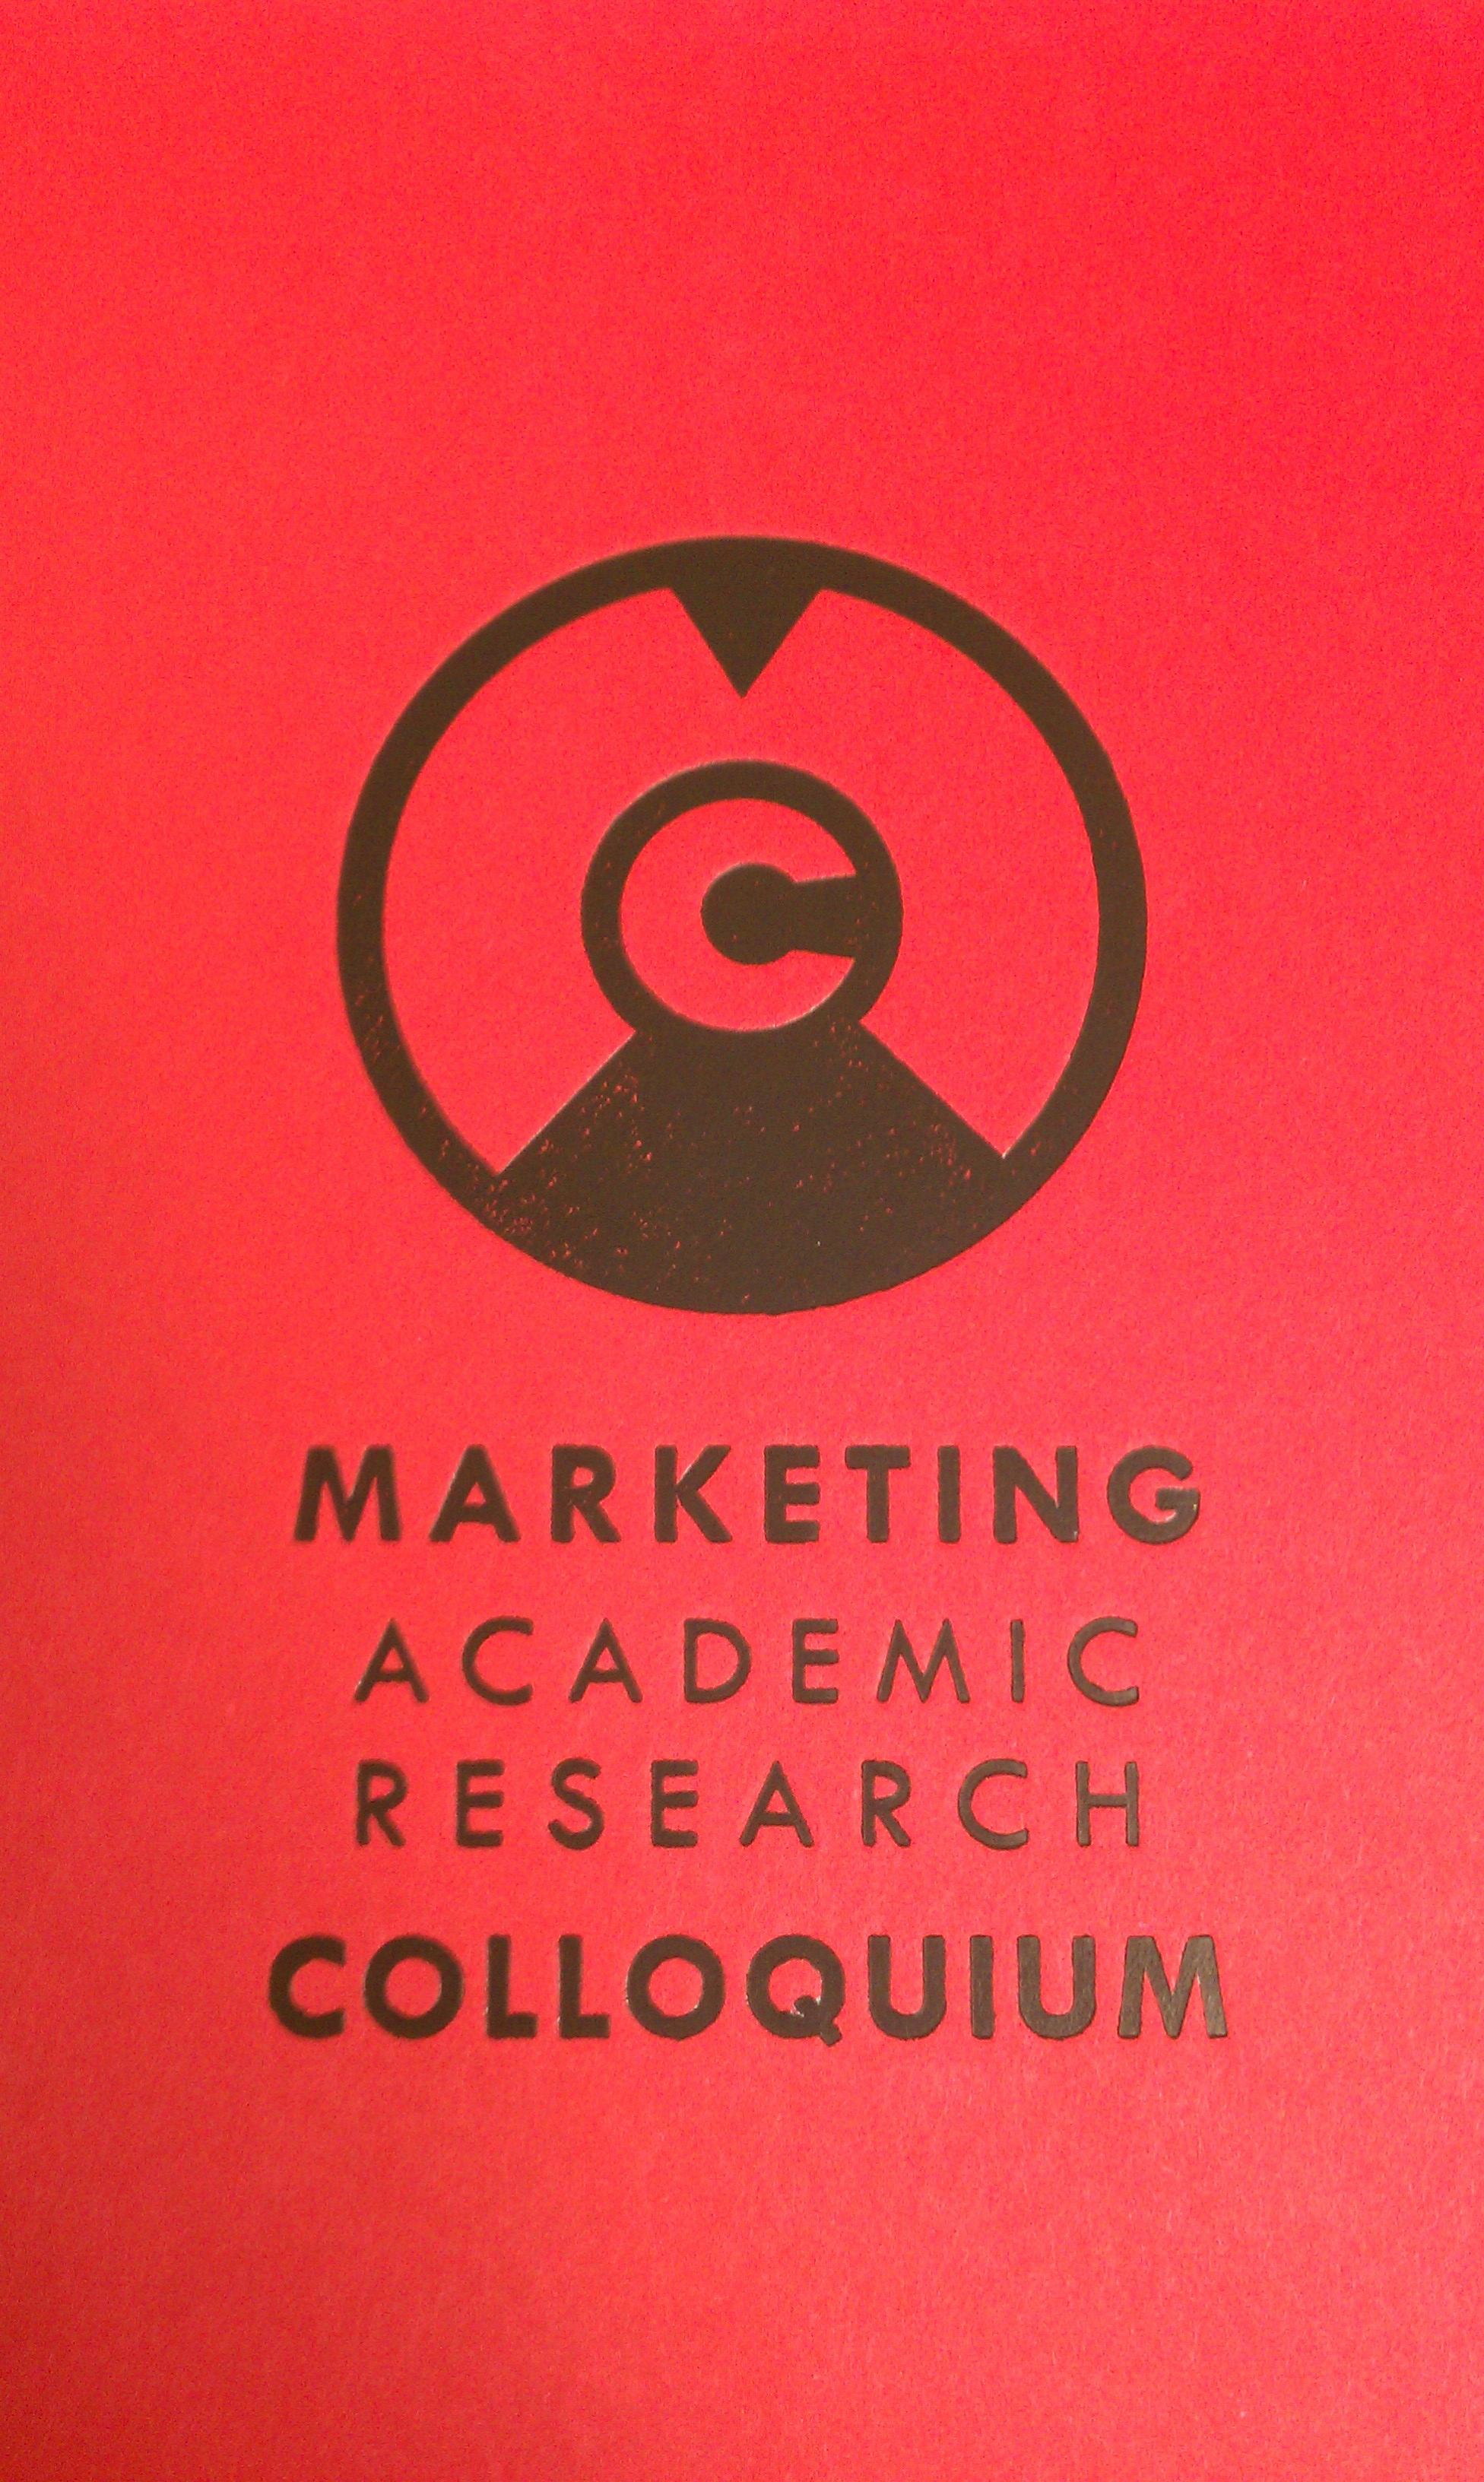 Marketing Research Colloquium Logo || 2lch